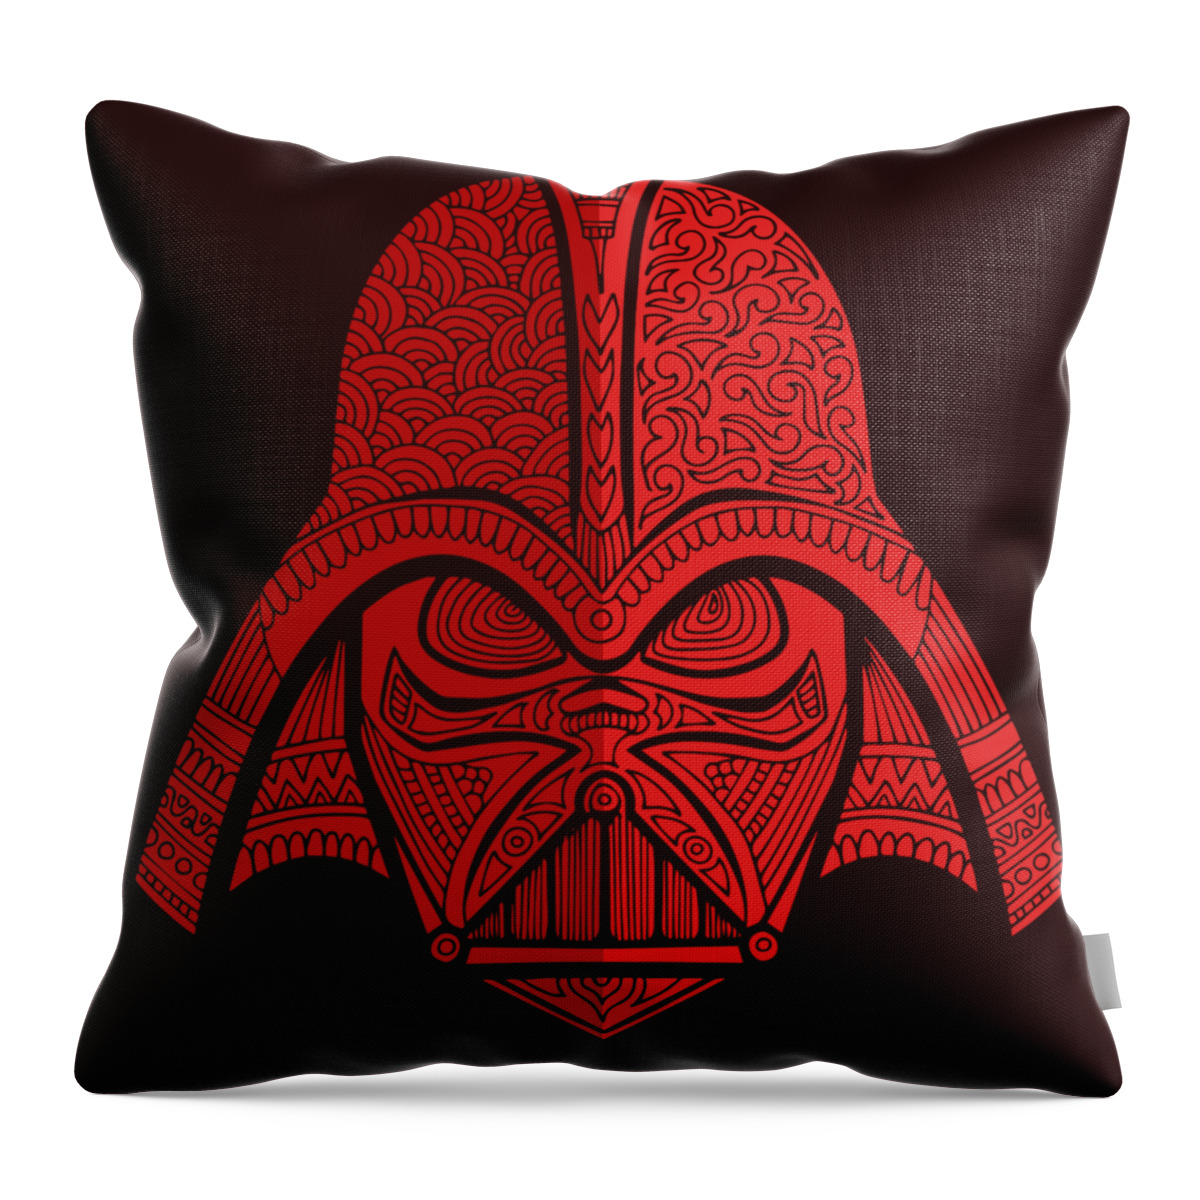 Darth Vader Throw Pillow featuring the mixed media Darth Vader - Star Wars Art - Red 02 by Studio Grafiikka